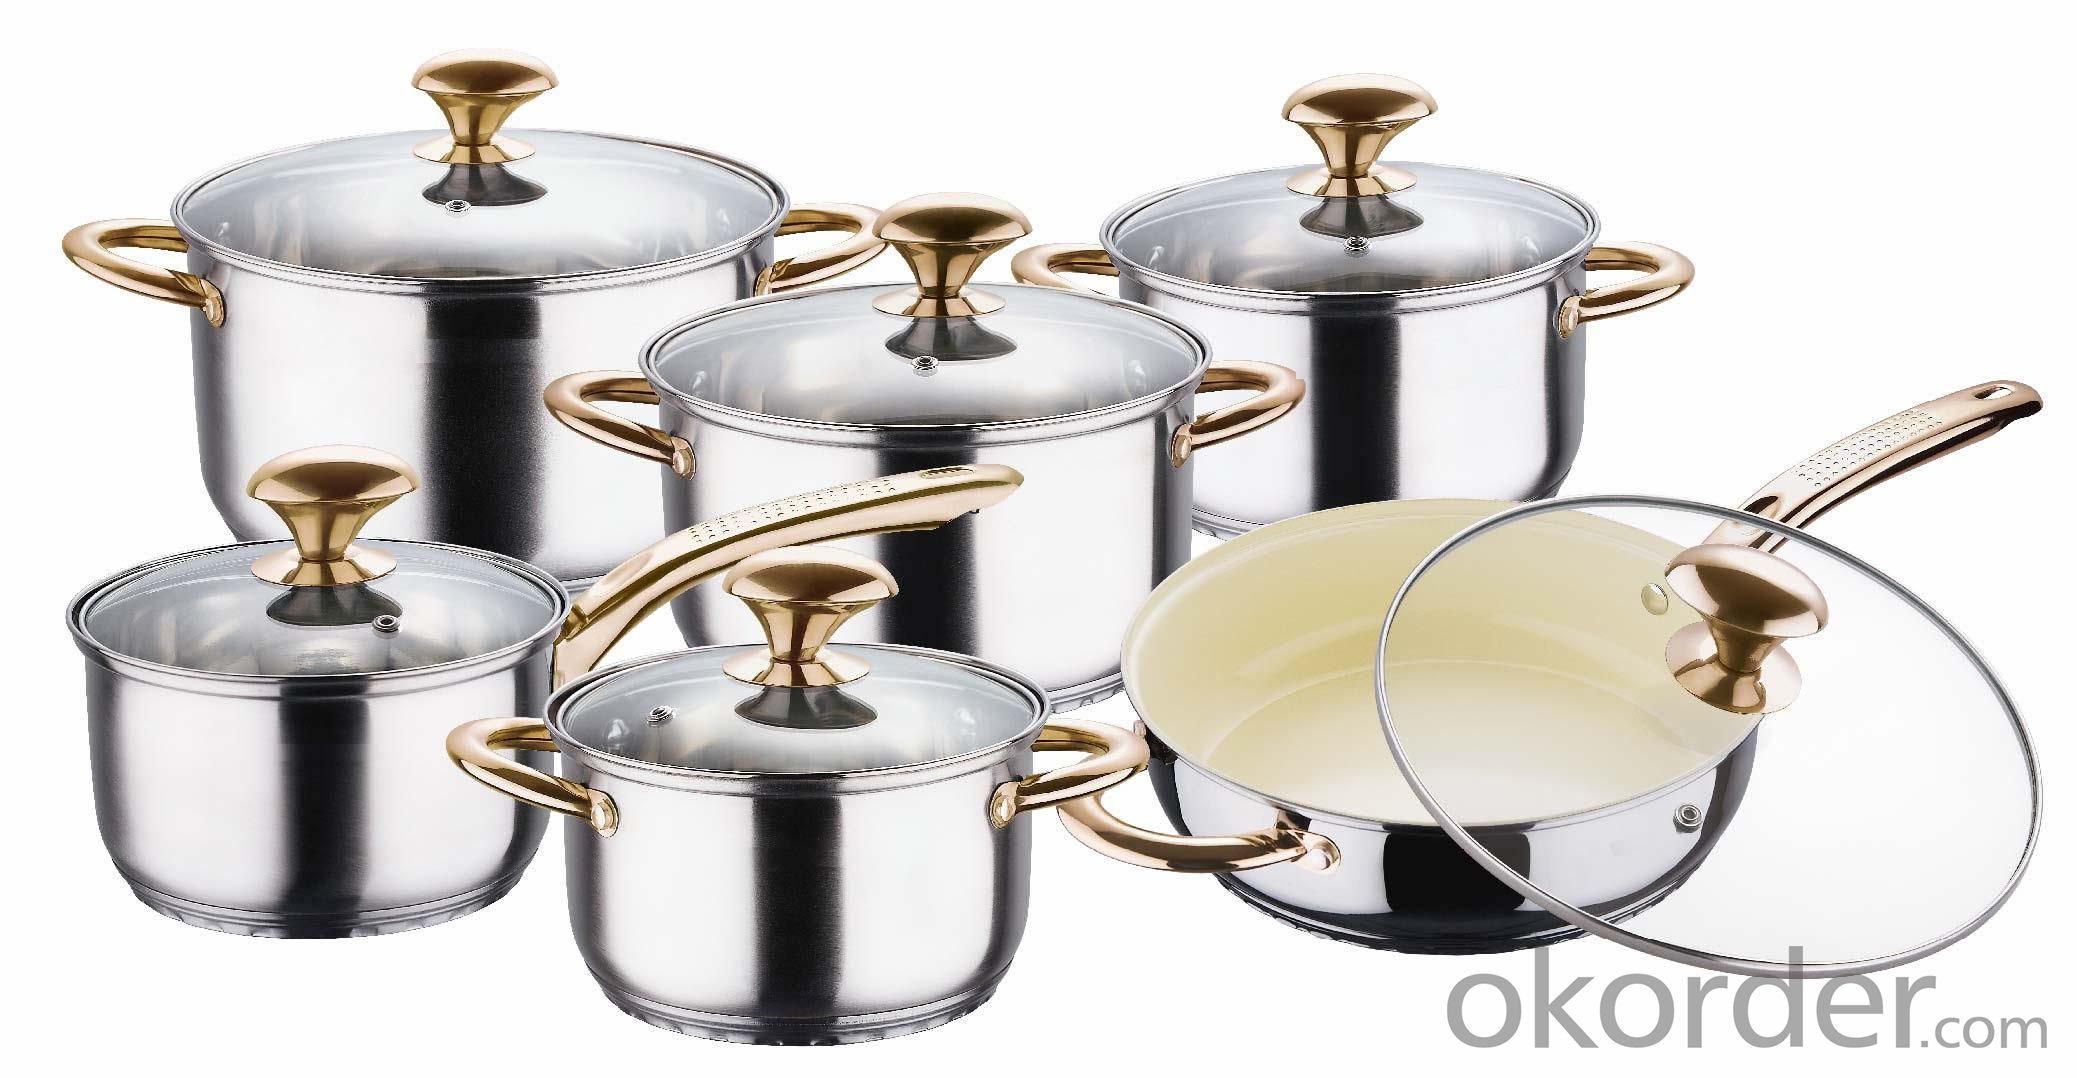 12 pcs Cookware Set